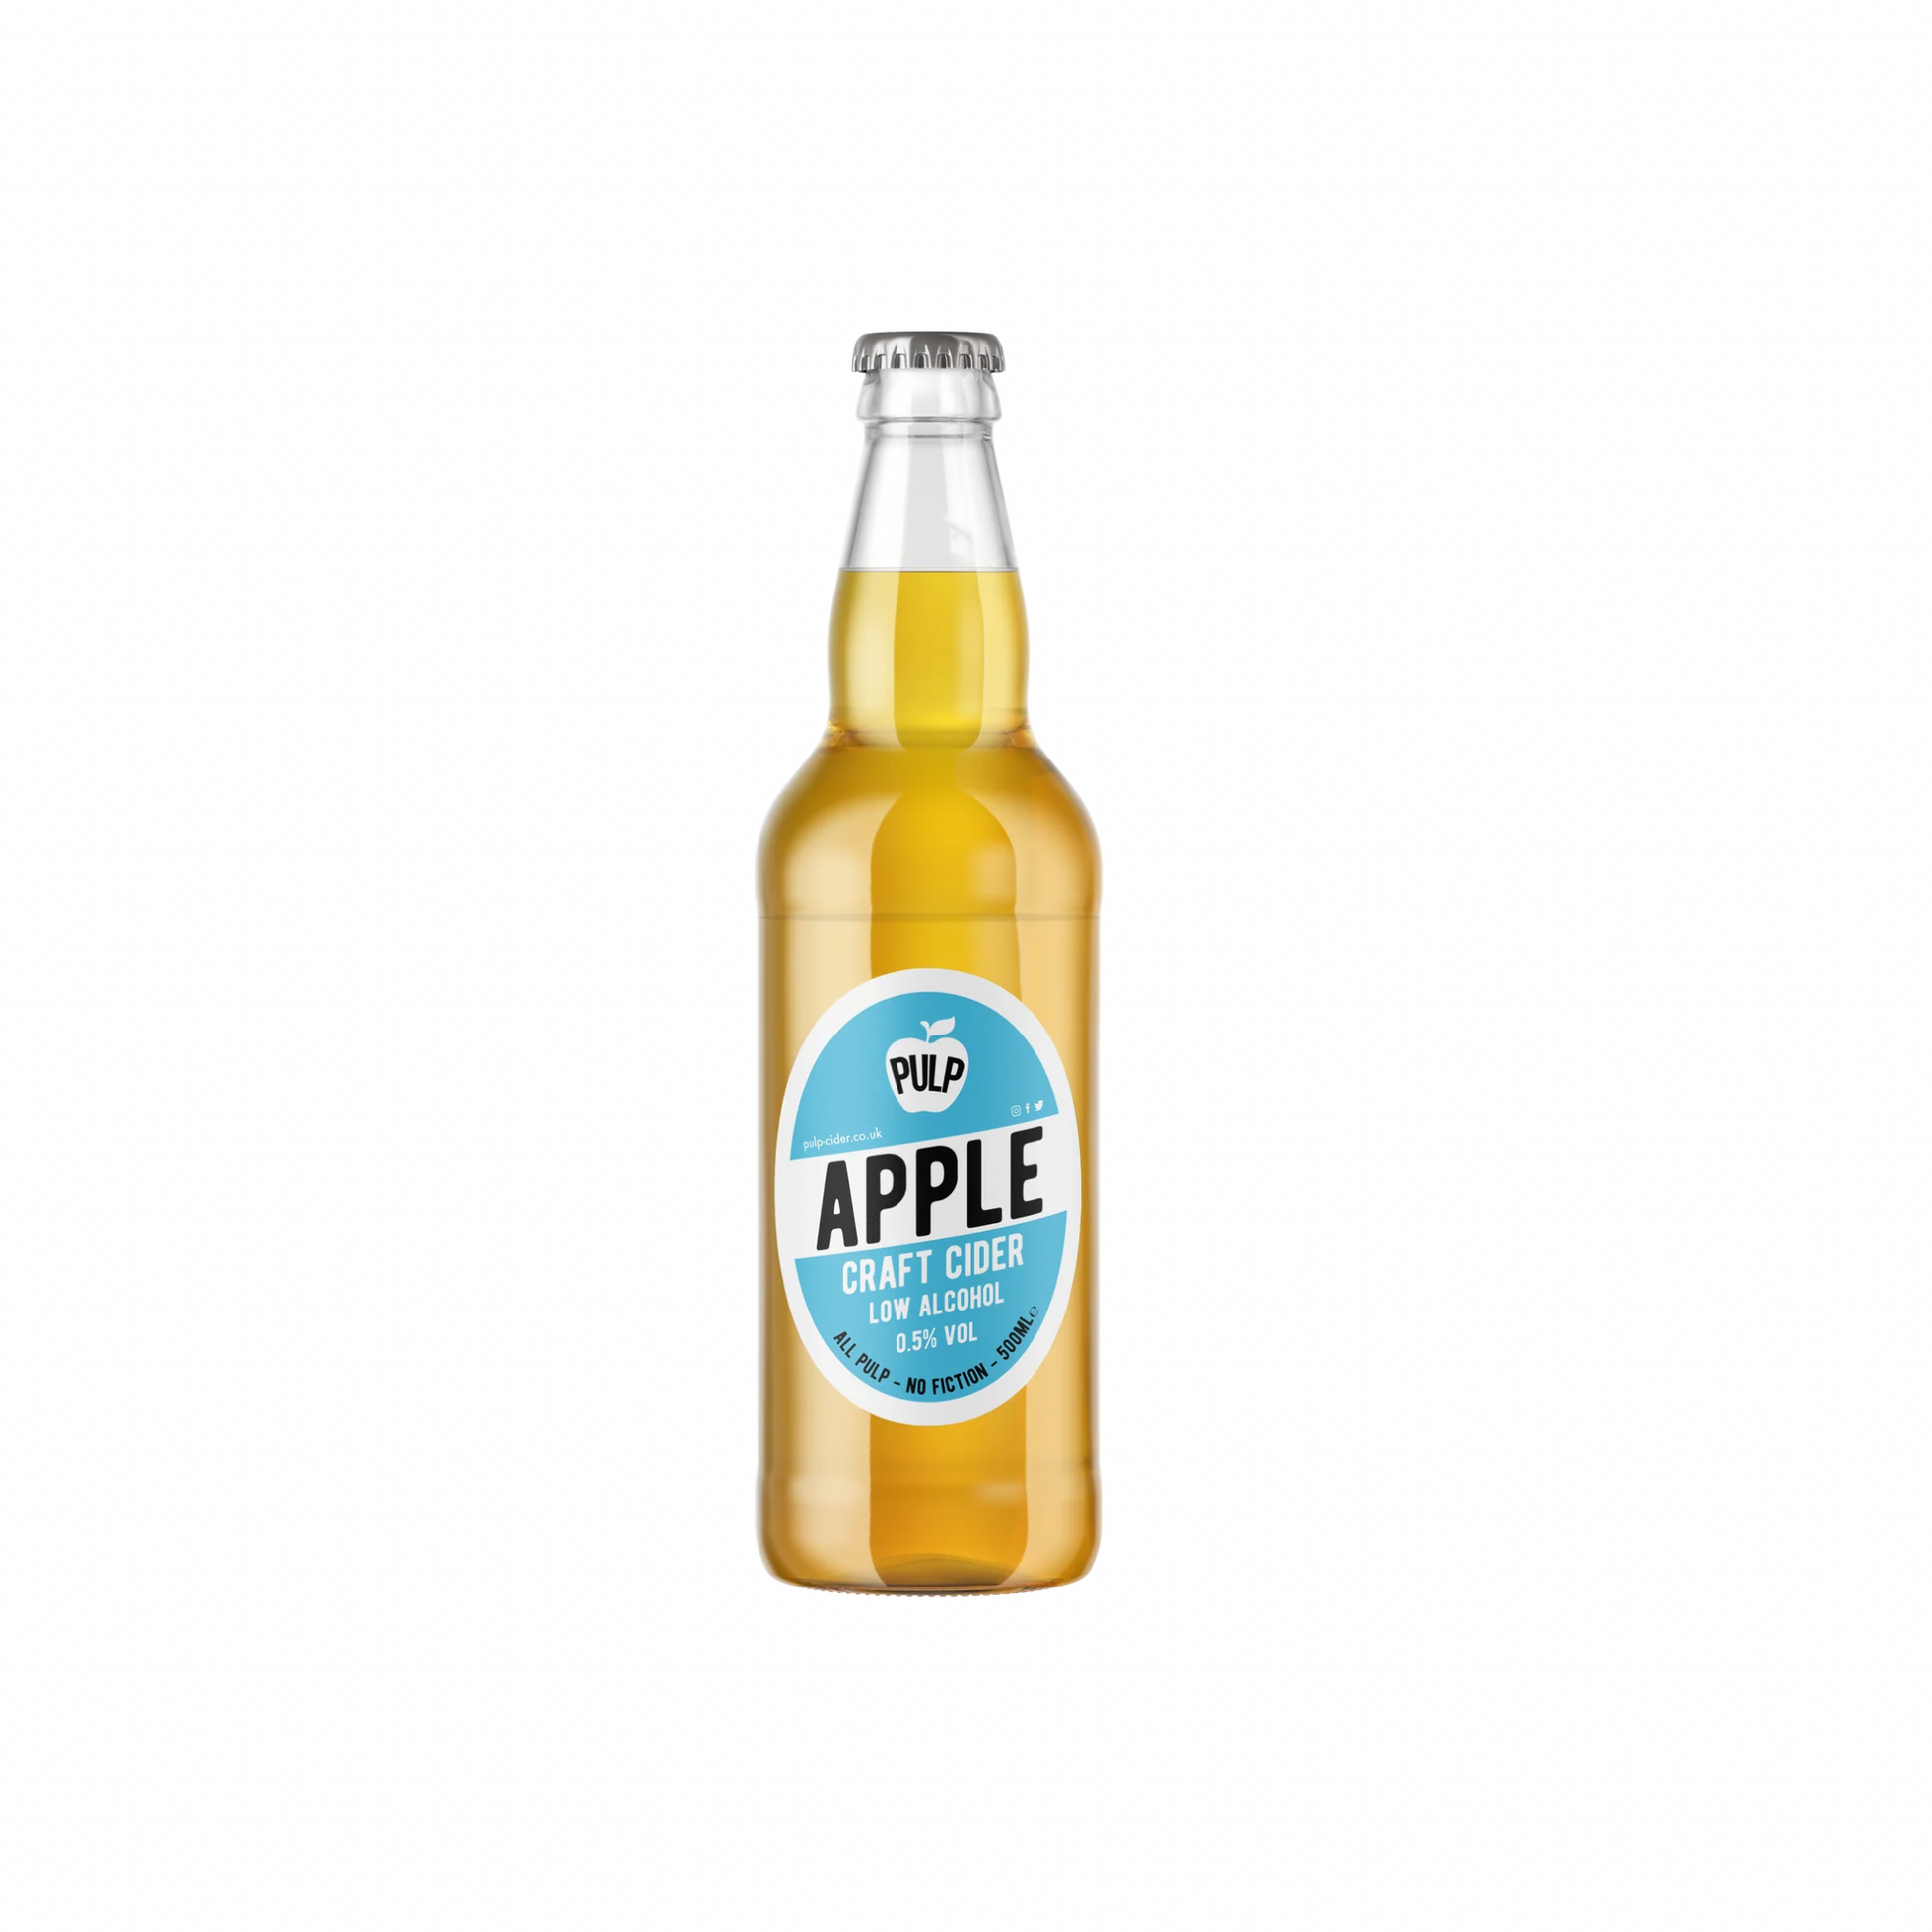 Pulp Apple Craft Cider Low Alcohol